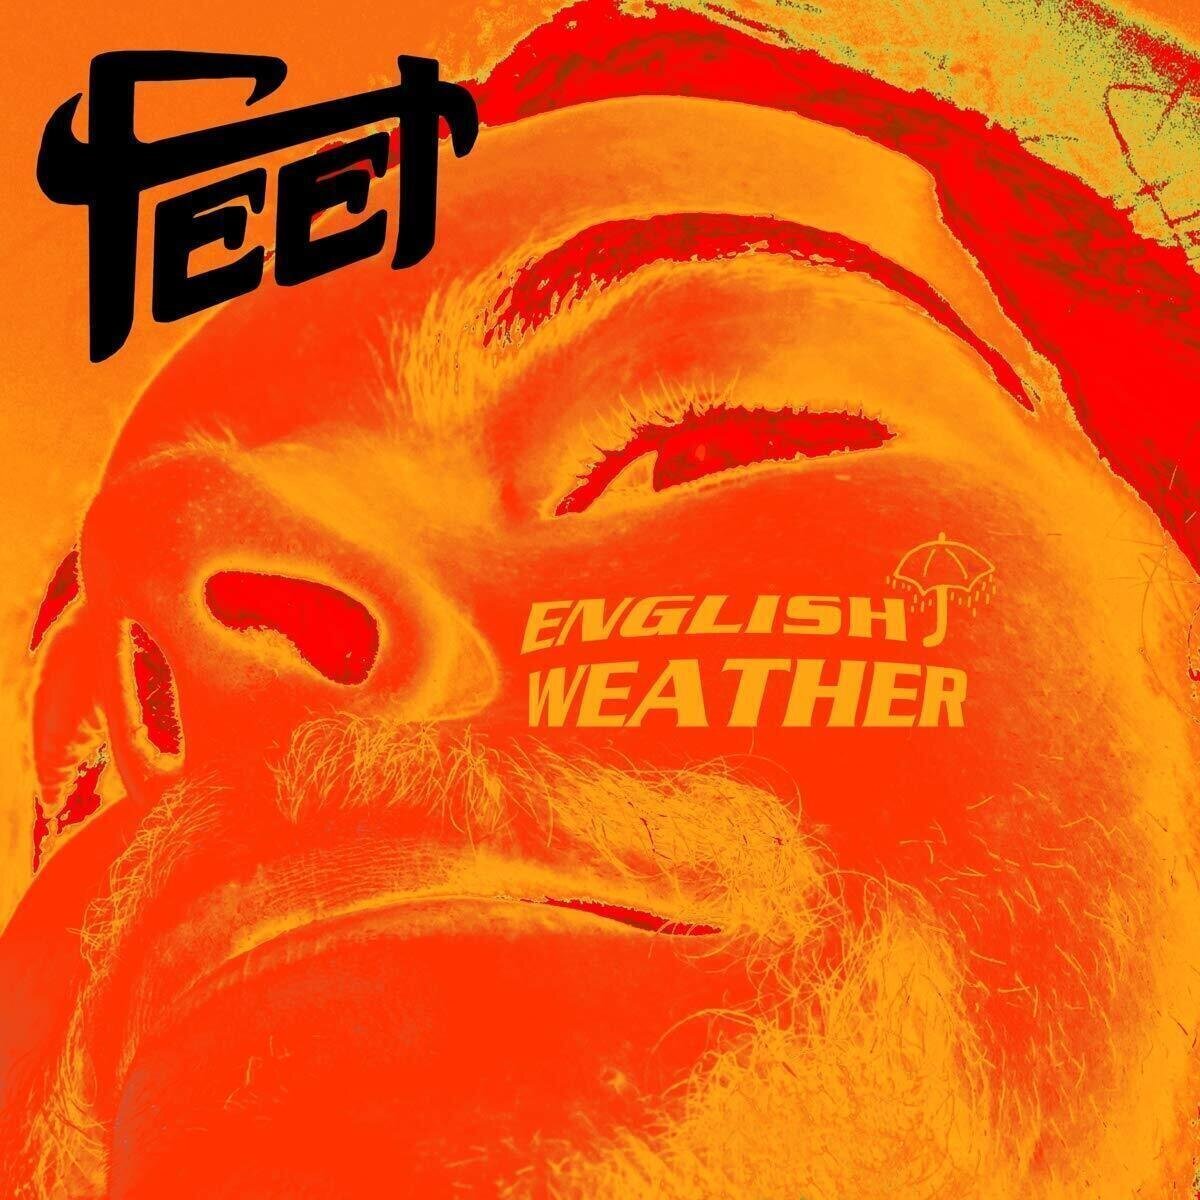 Vinylplade Feet - English Weather (Picture Disc) (LP)